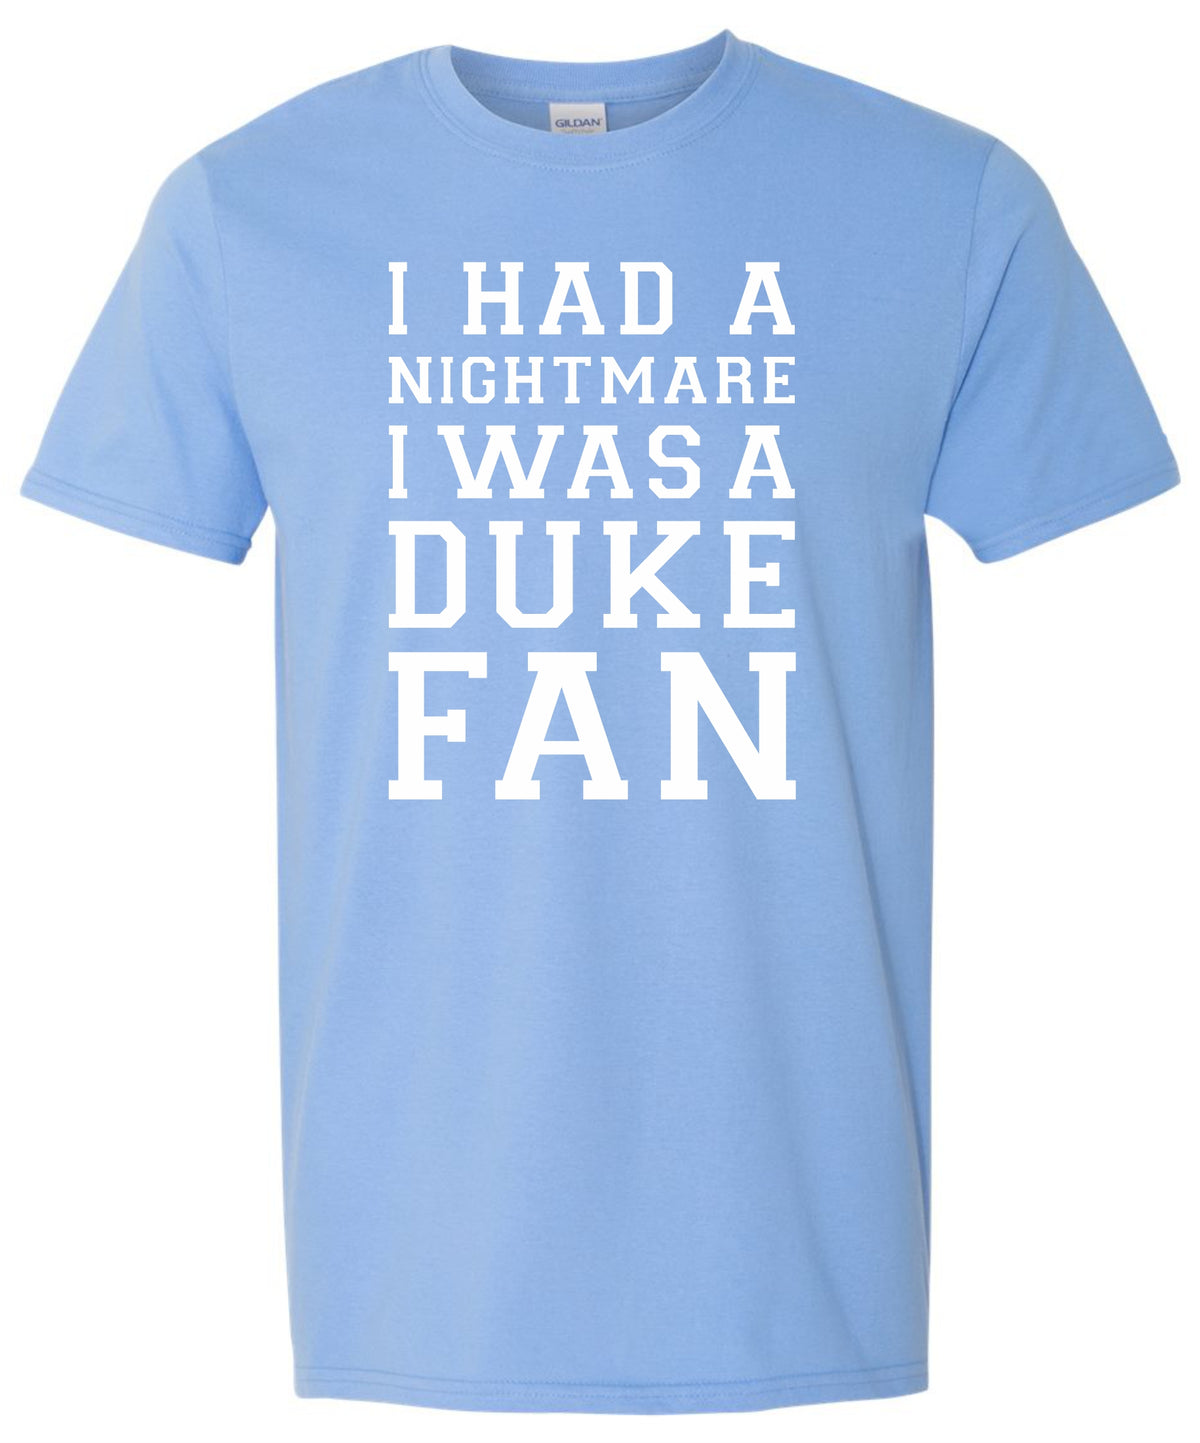 I Had a Nightmare, I was a Duke Fan Statement T-shirt